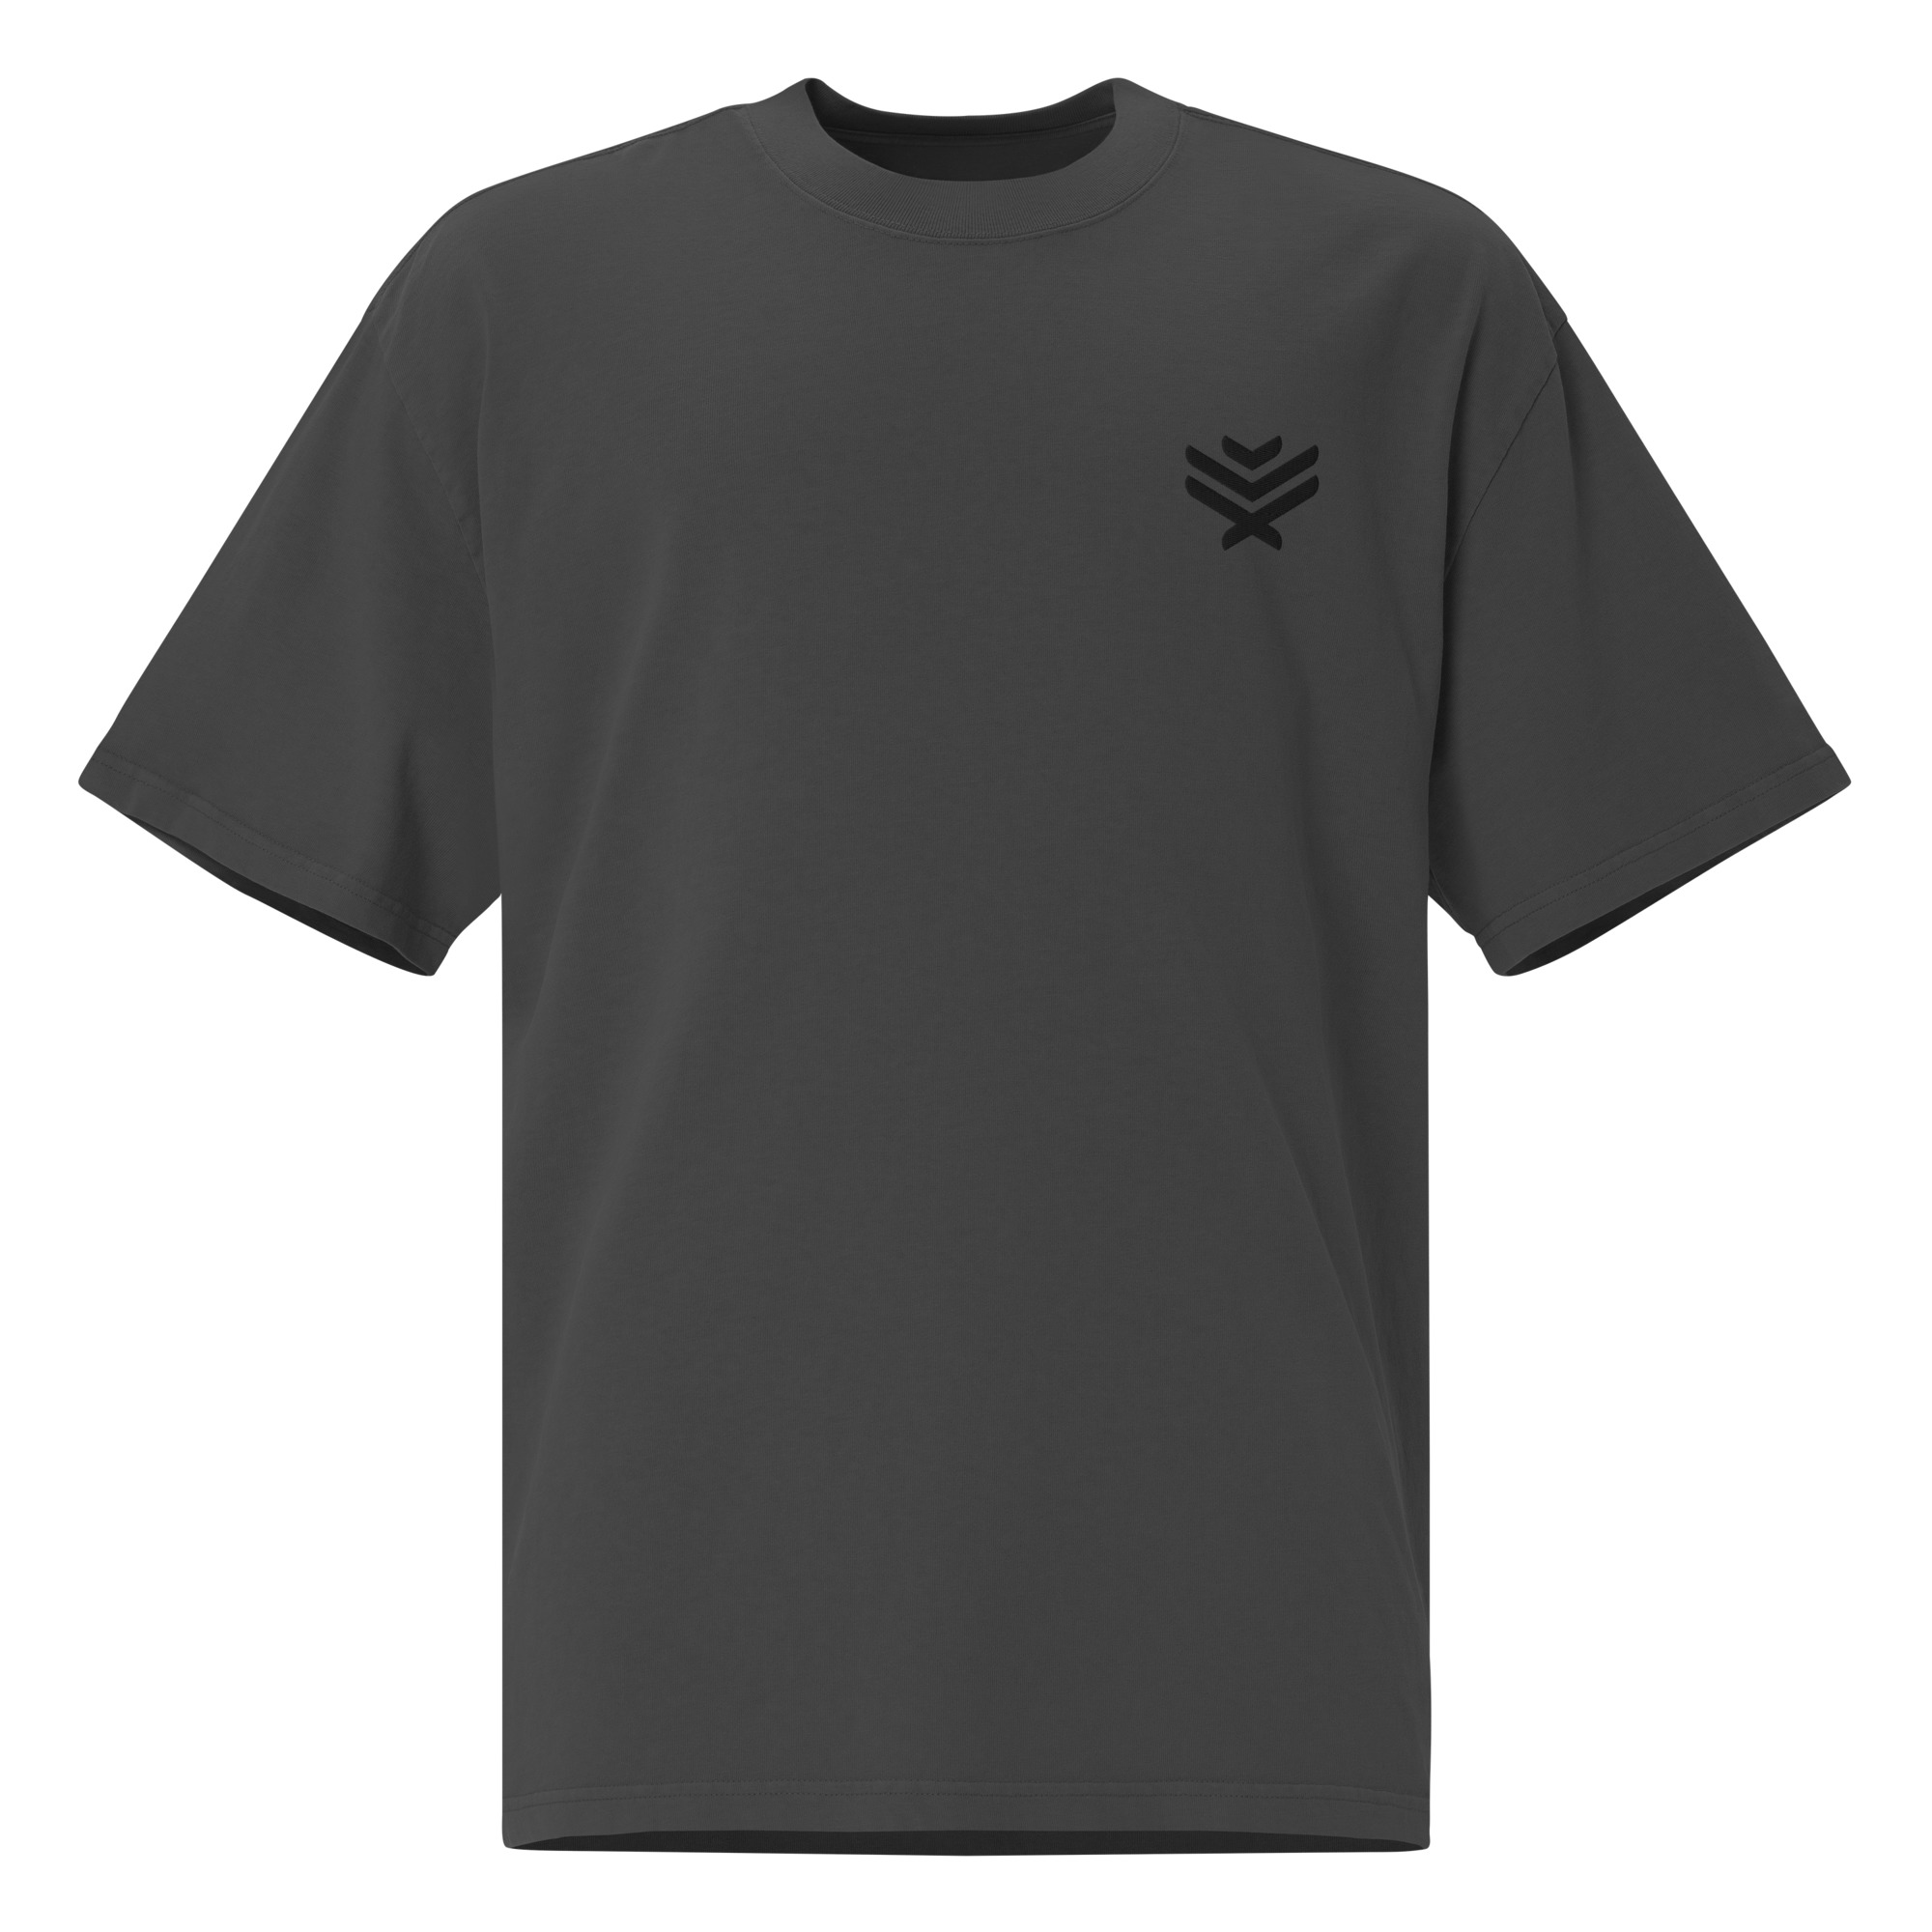 LIRIA Eagle Black Embroidered Oversized Adult T-Shirt